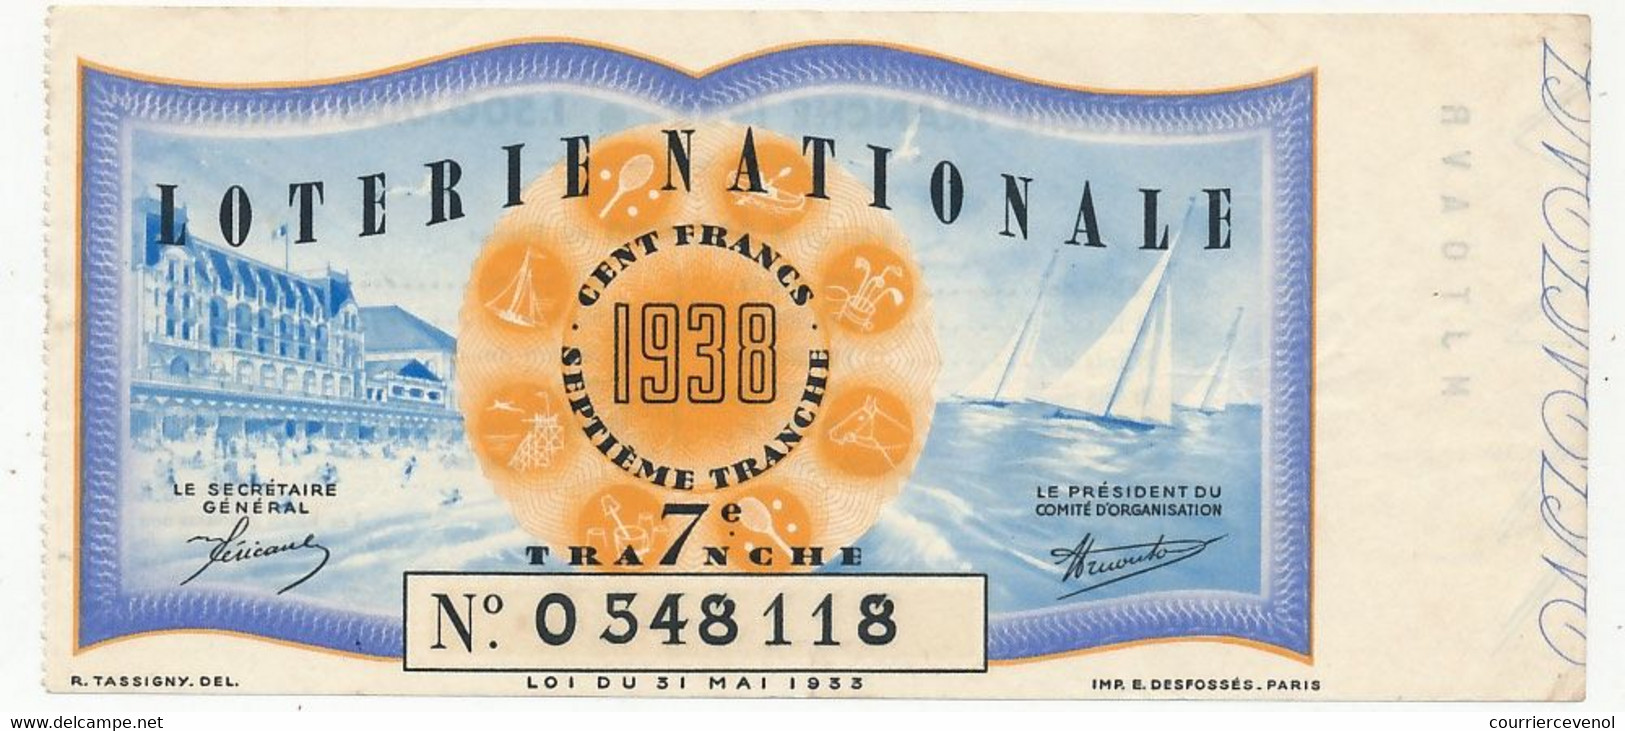 FRANCE - Loterie Nationale - Billet Entier - 7eme Tranche 1938 (Illustration Bord De Mer) - Billets De Loterie